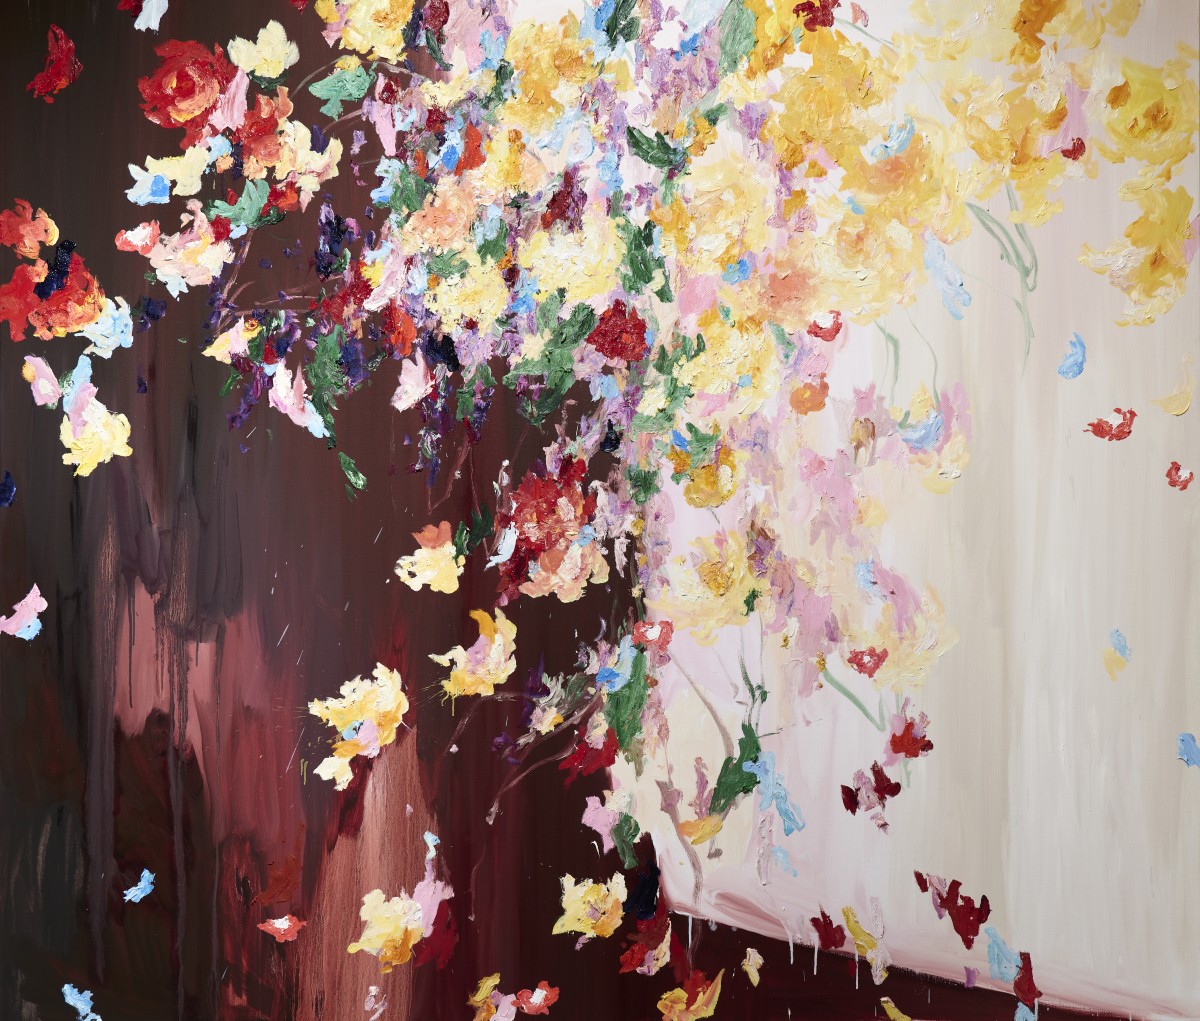 Valeriana, a Wildflower Fields painting by Arne Quinze